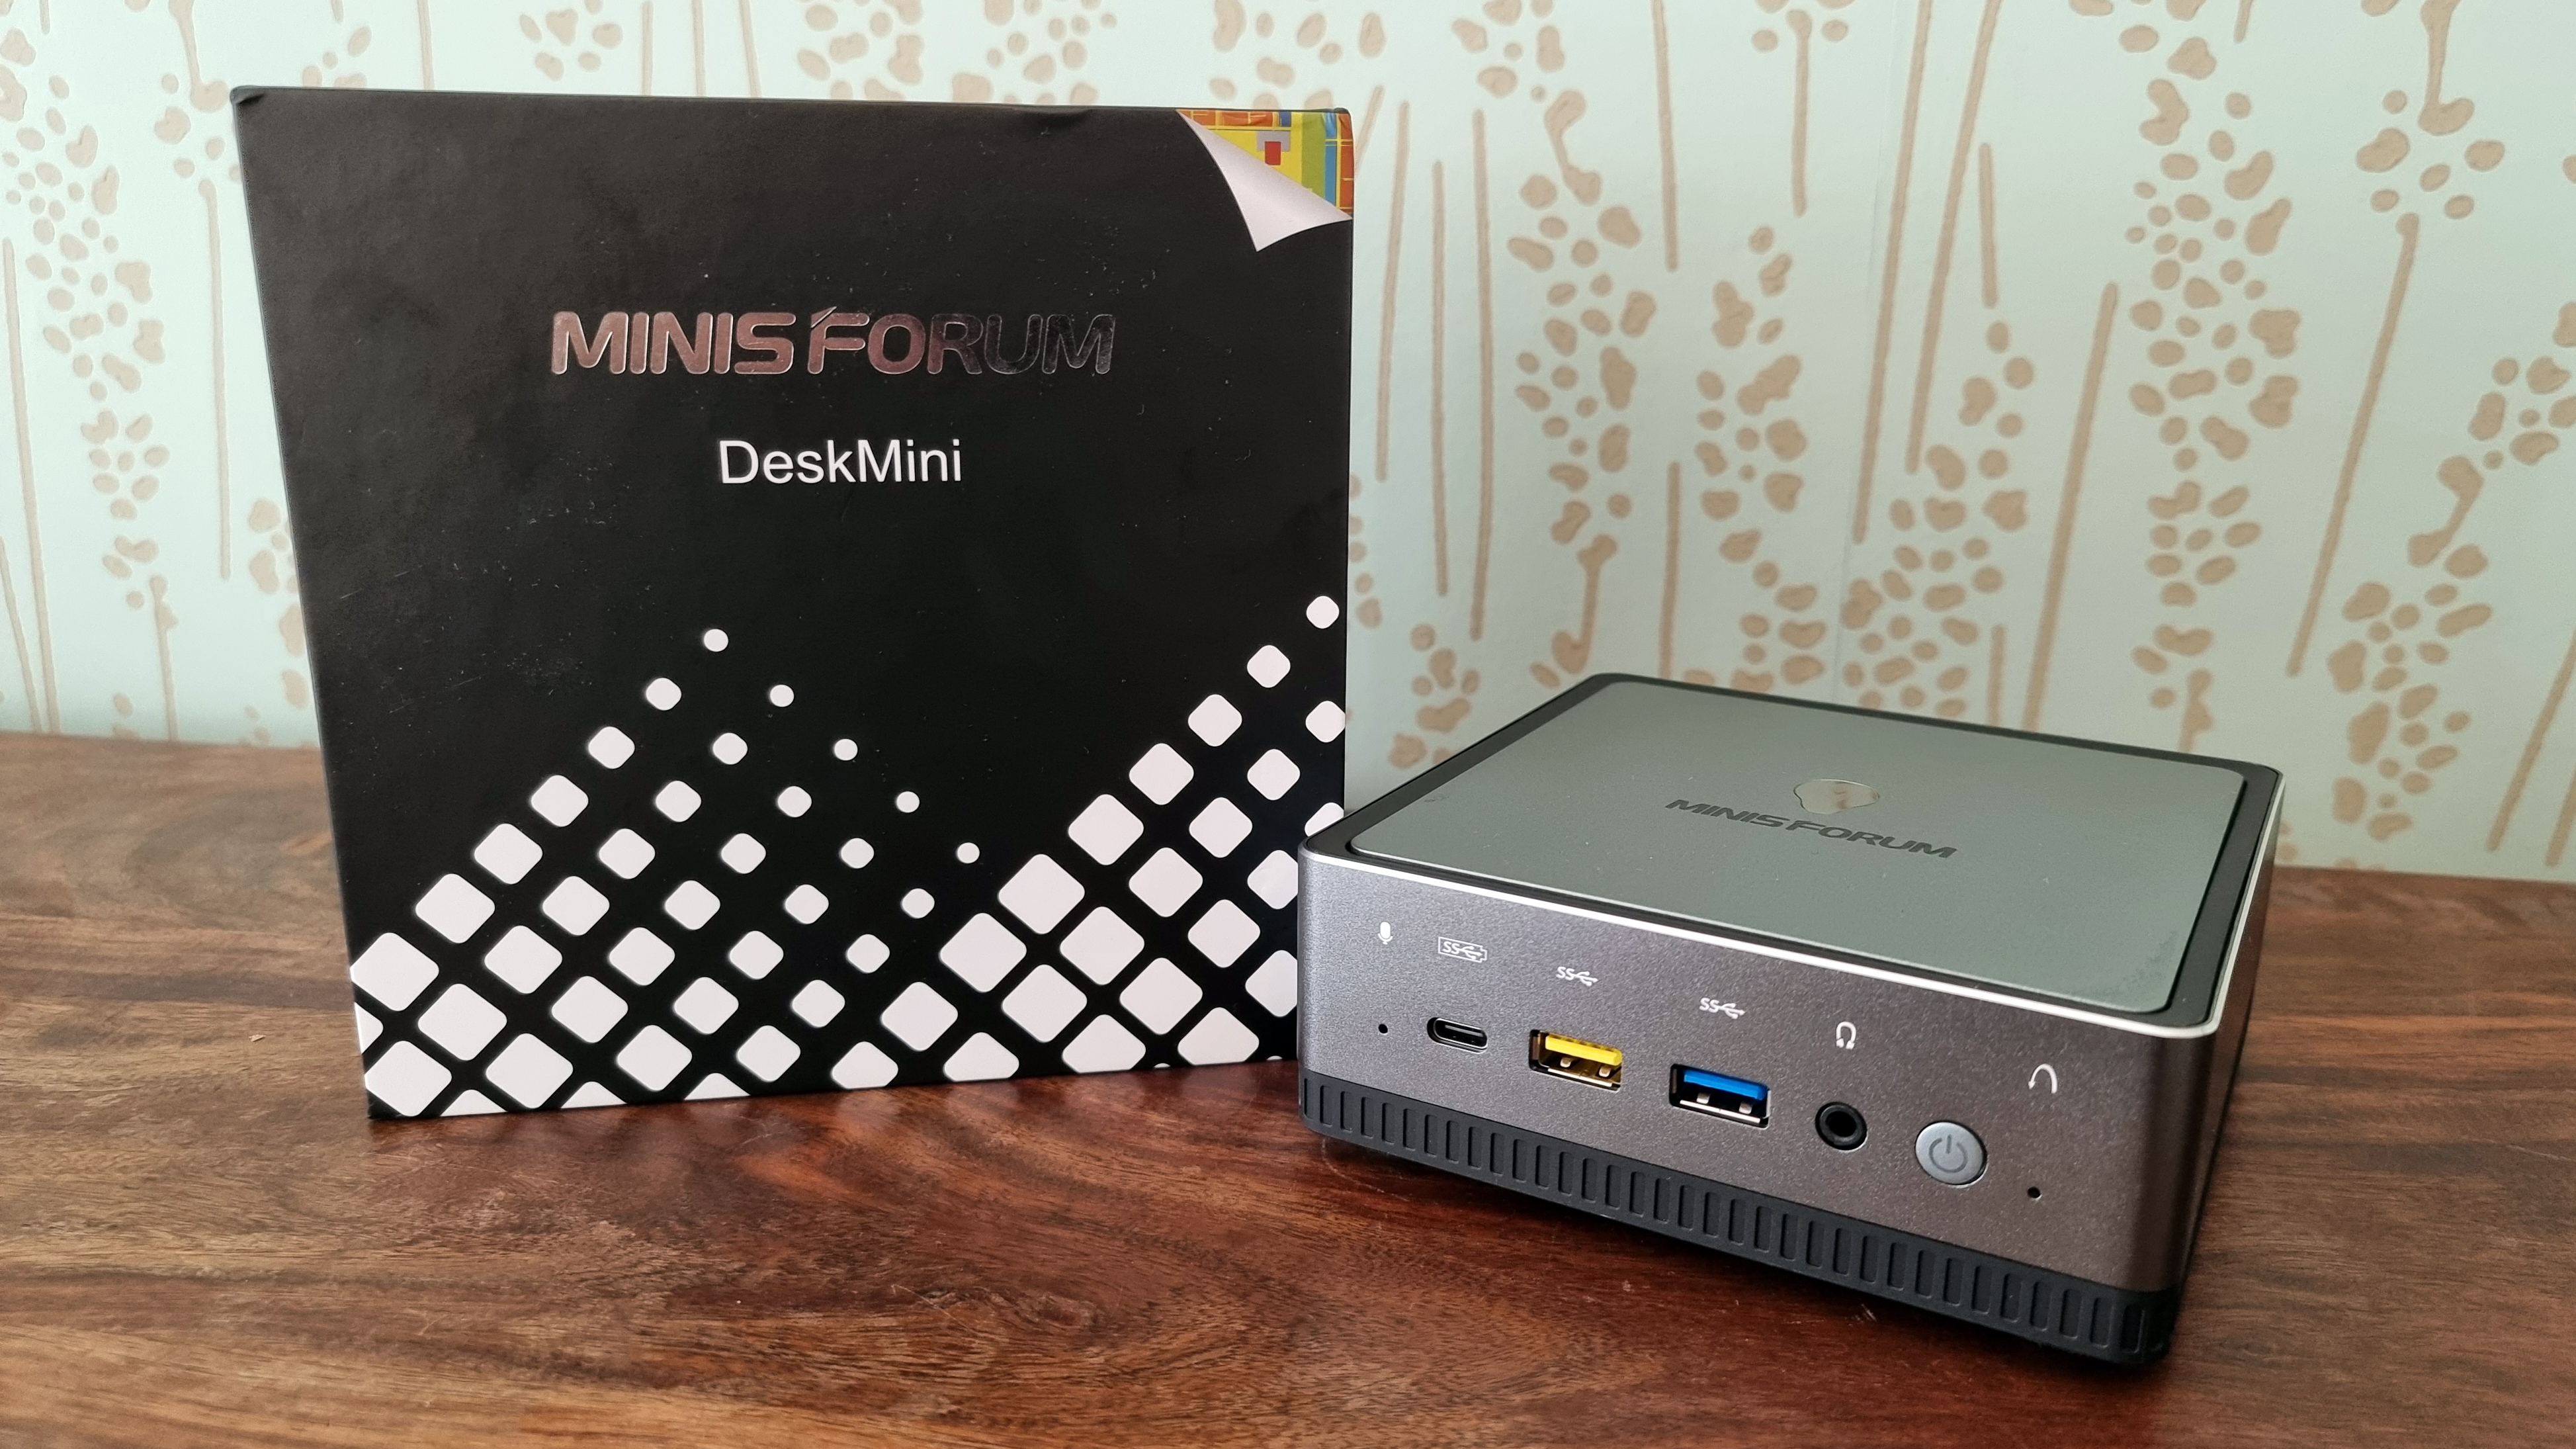 Minisforum EliteMini UM700 review: a pint-sized powerhouse PC